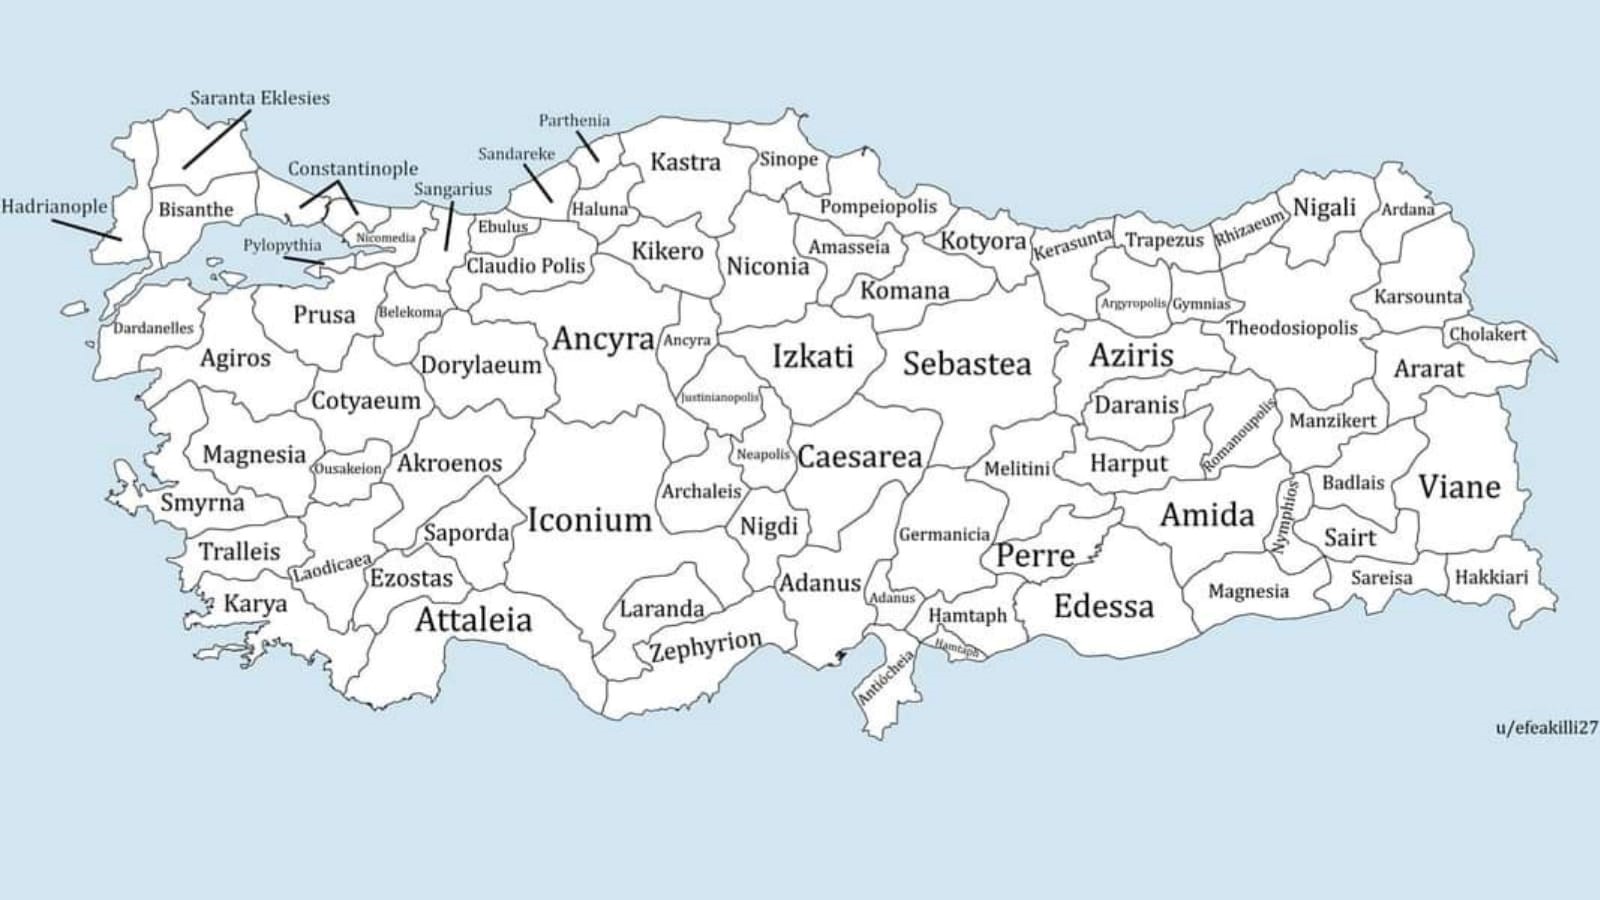 Eski Anadolu